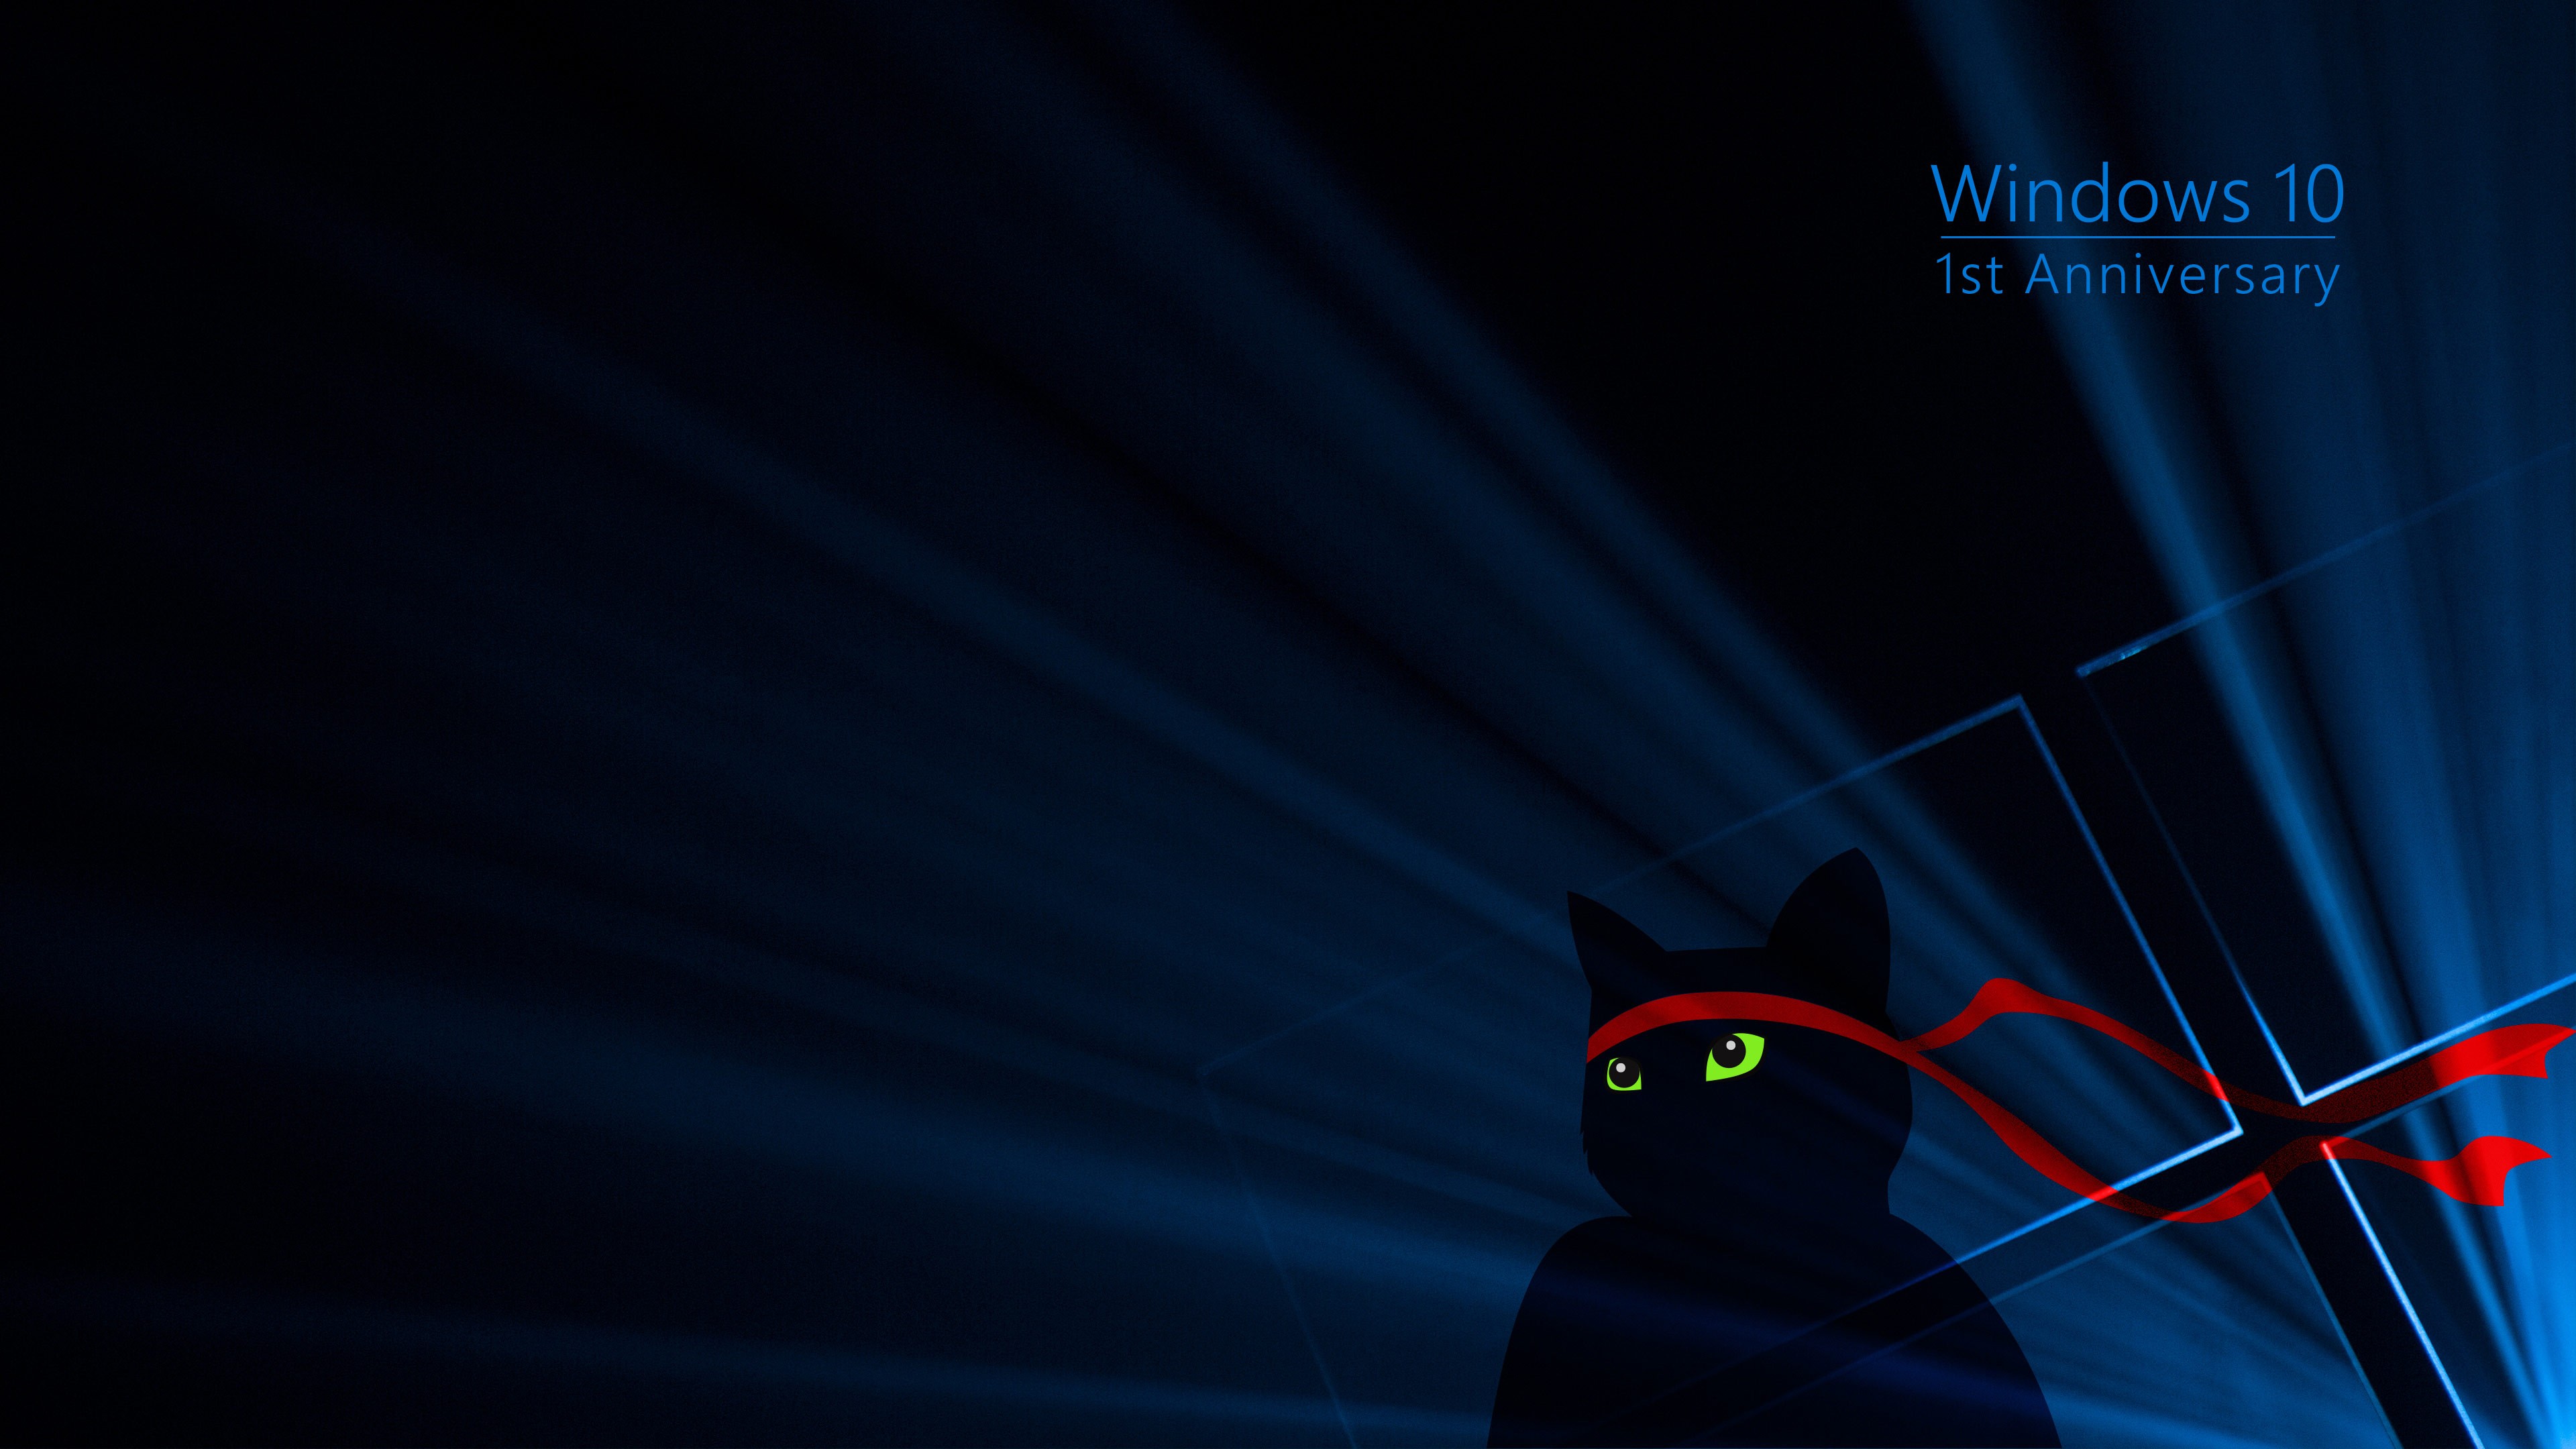 Wallpaper, black, cat, dark, red, green, blue, Windows Windows 10 Anniversary, light, line, darkness, screenshot, computer wallpaper, atmosphere of earth 3840x2160